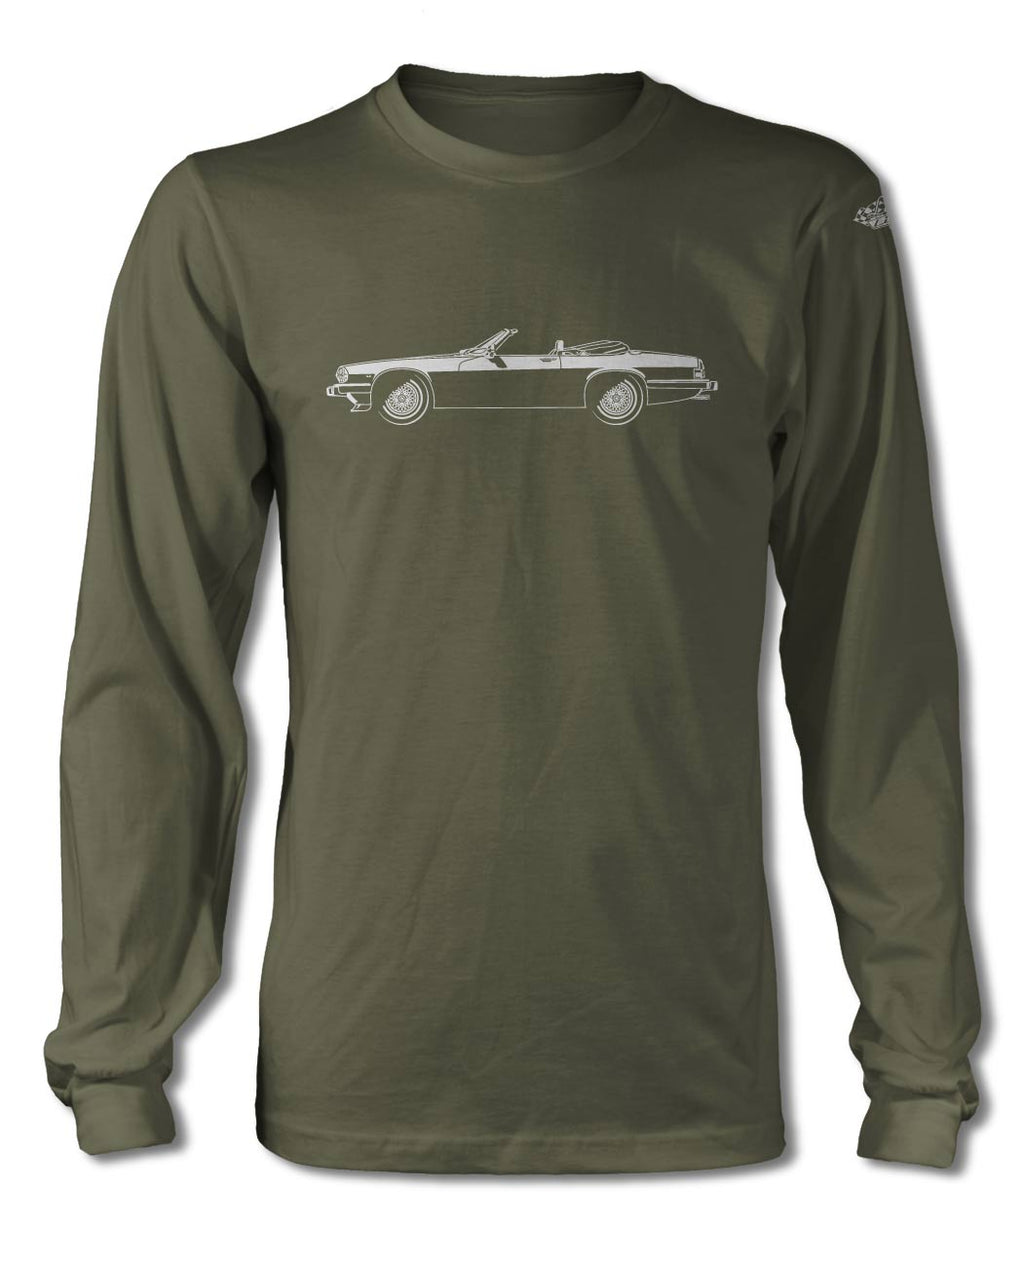 Jaguar XJ-S XJS Convertible T-Shirt - Long Sleeves - Side View